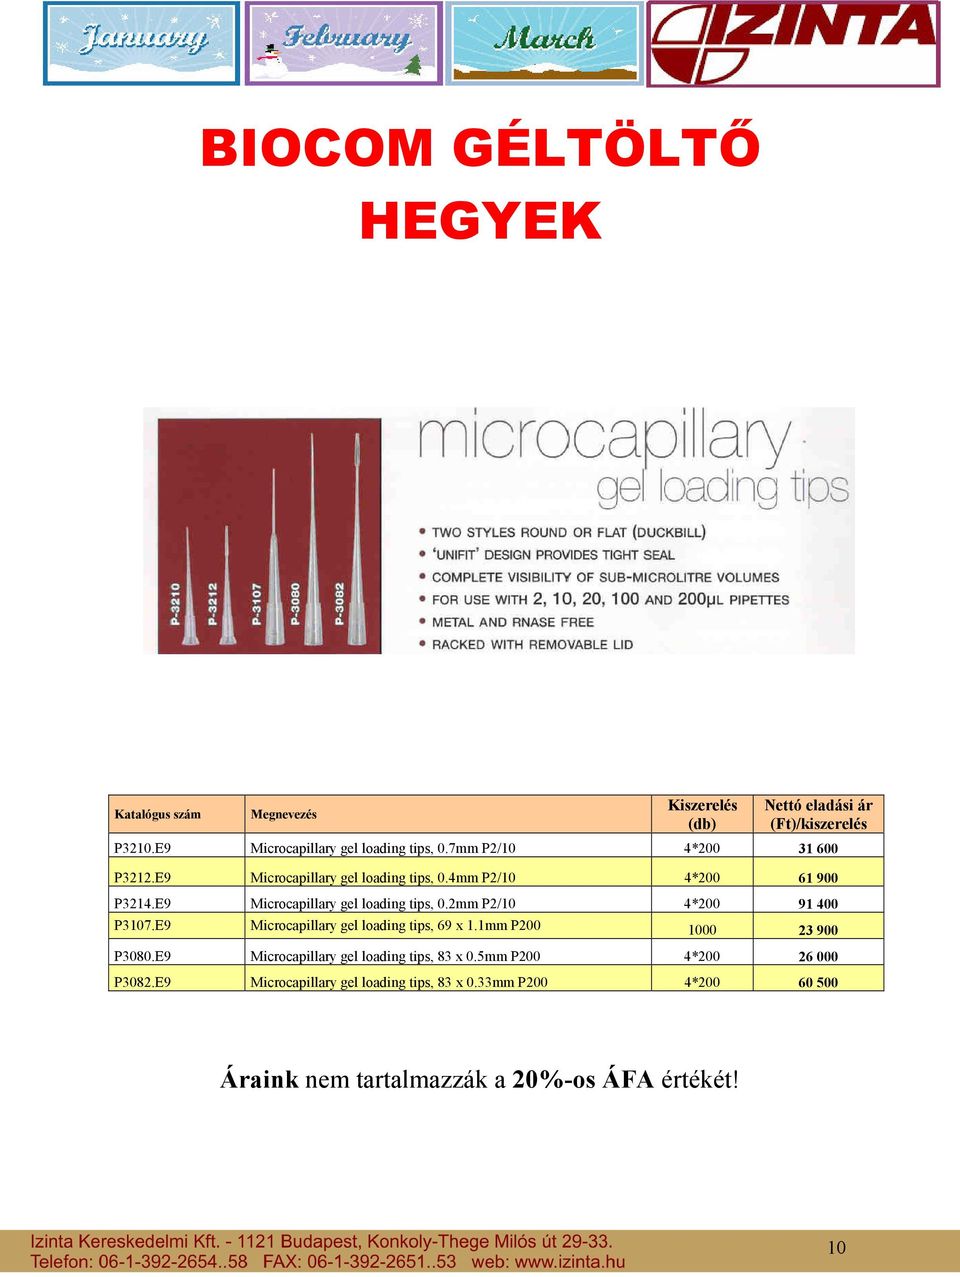 E9 Microcapillary gel loading tips, 0.2mm P2/10 4*200 91 400 P3107.E9 Microcapillary gel loading tips, 69 x 1.